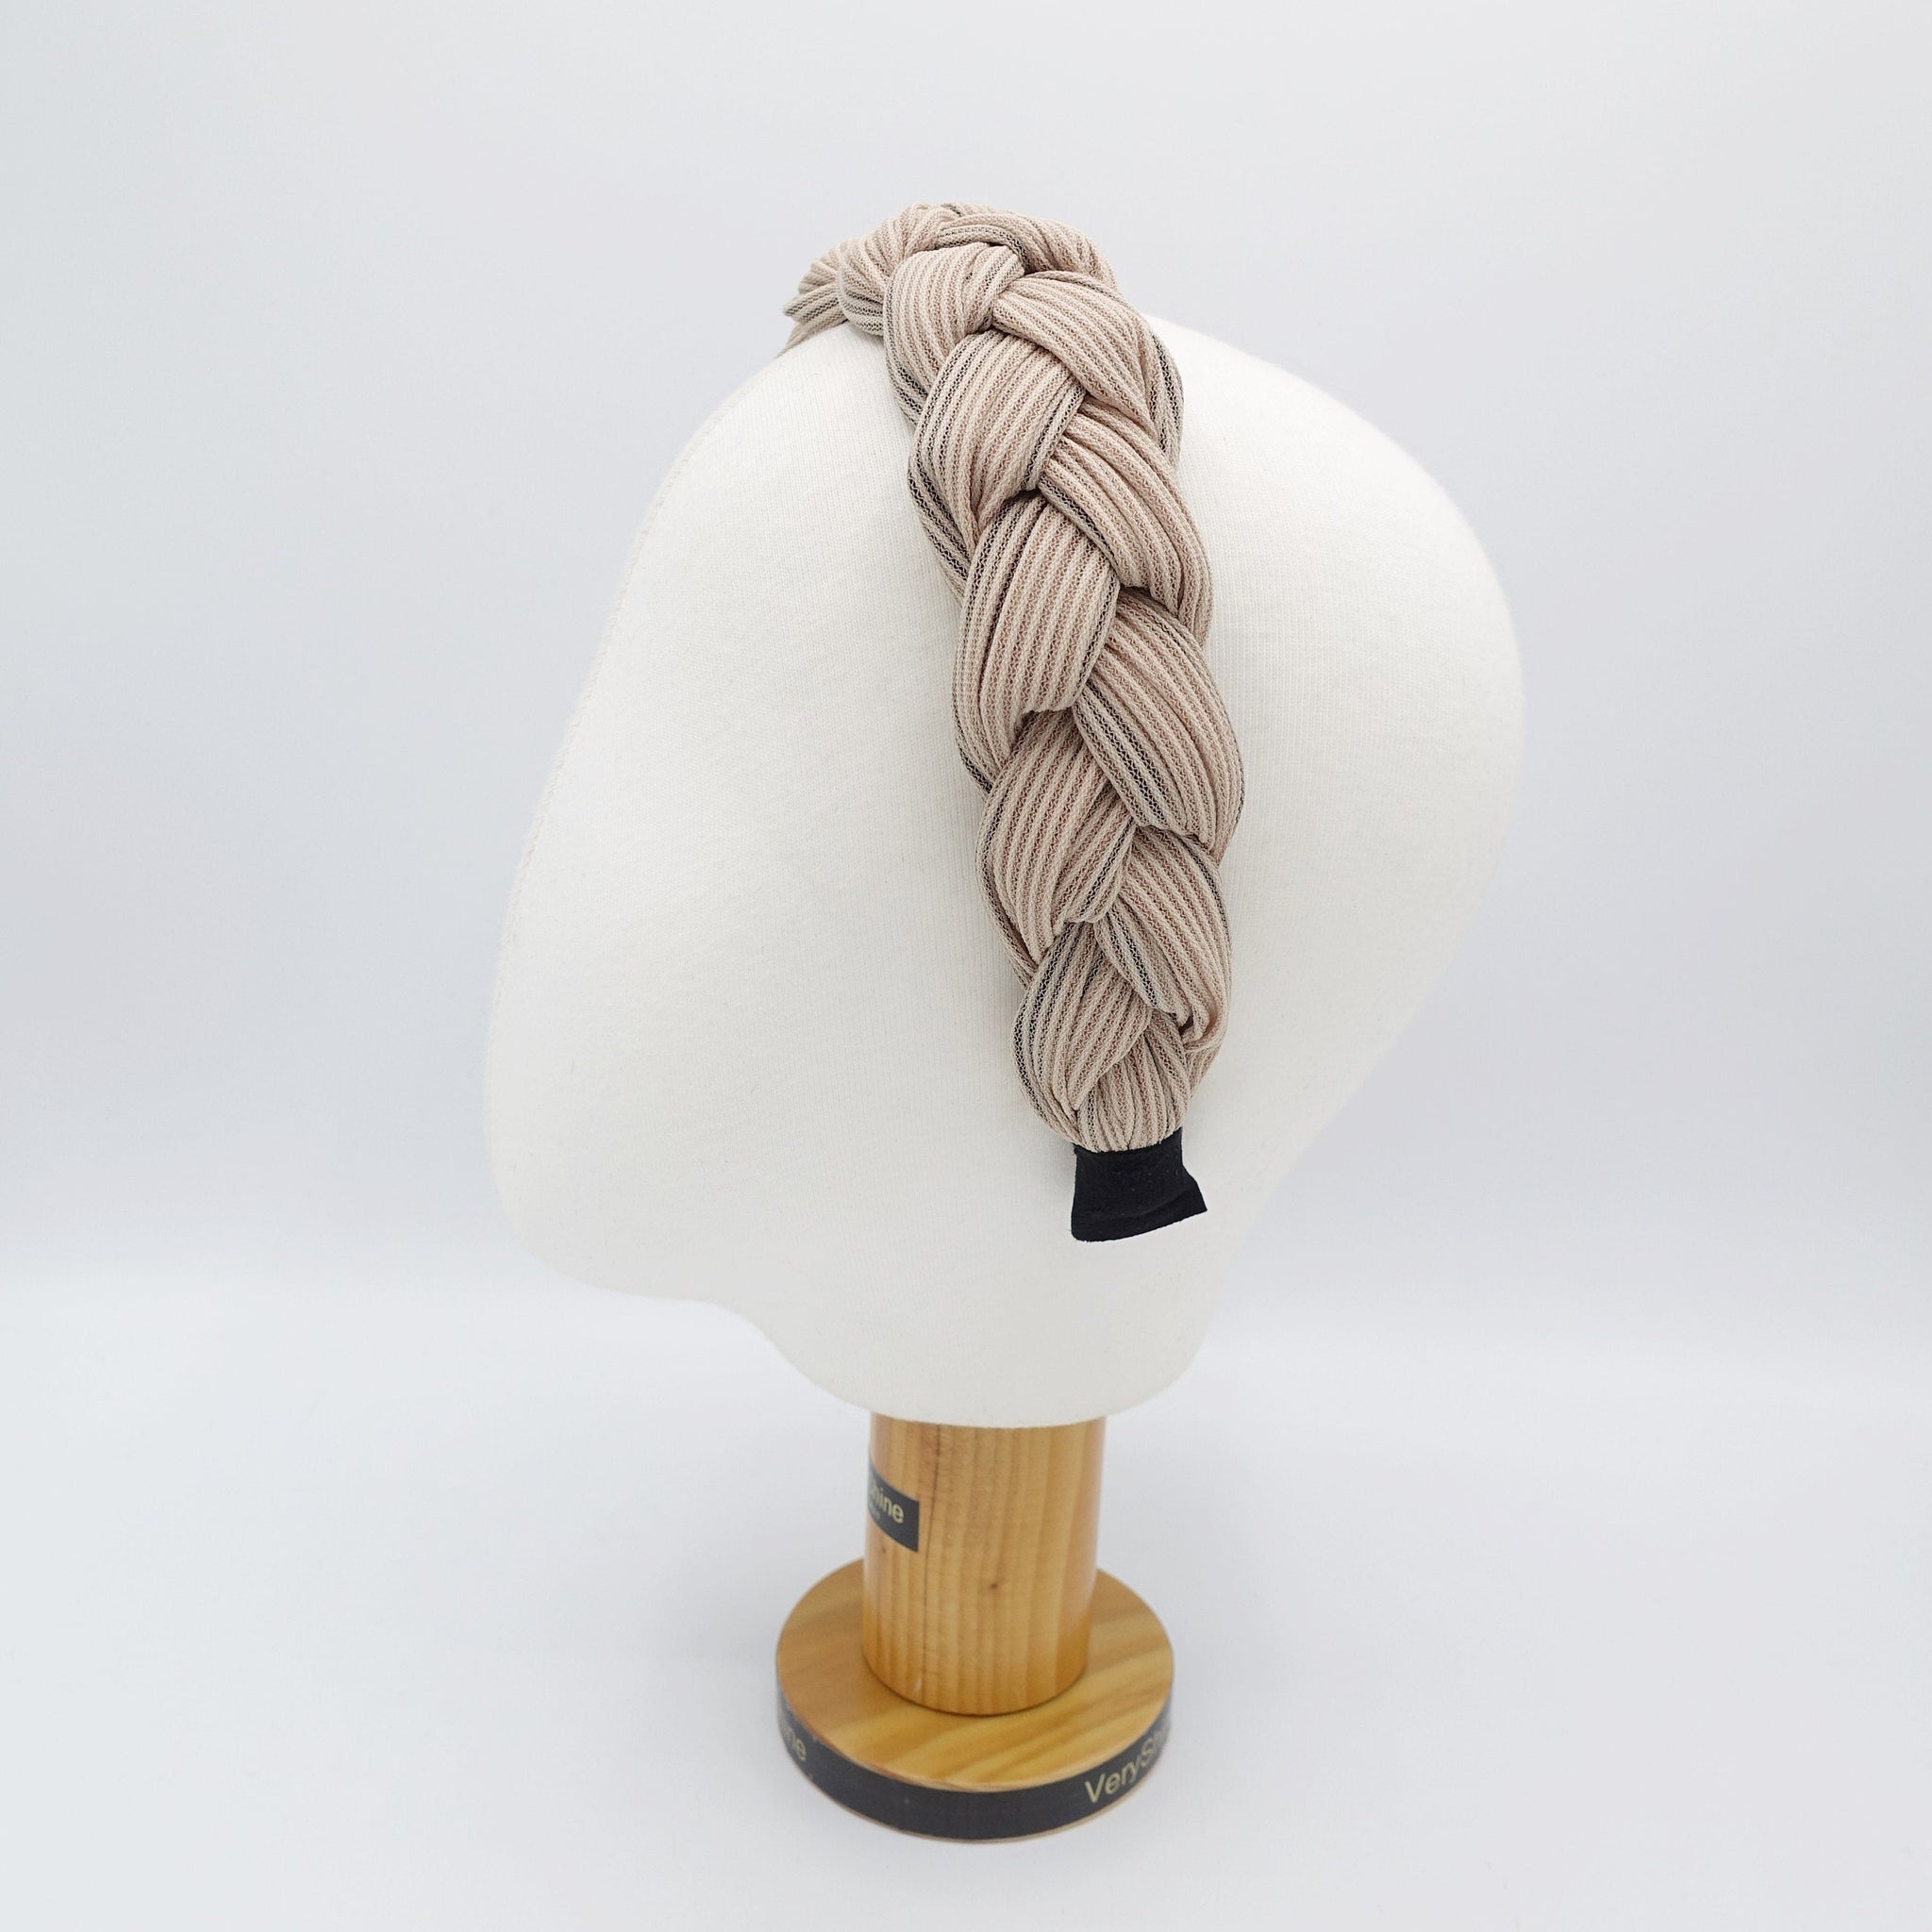 where to buy braided headbands